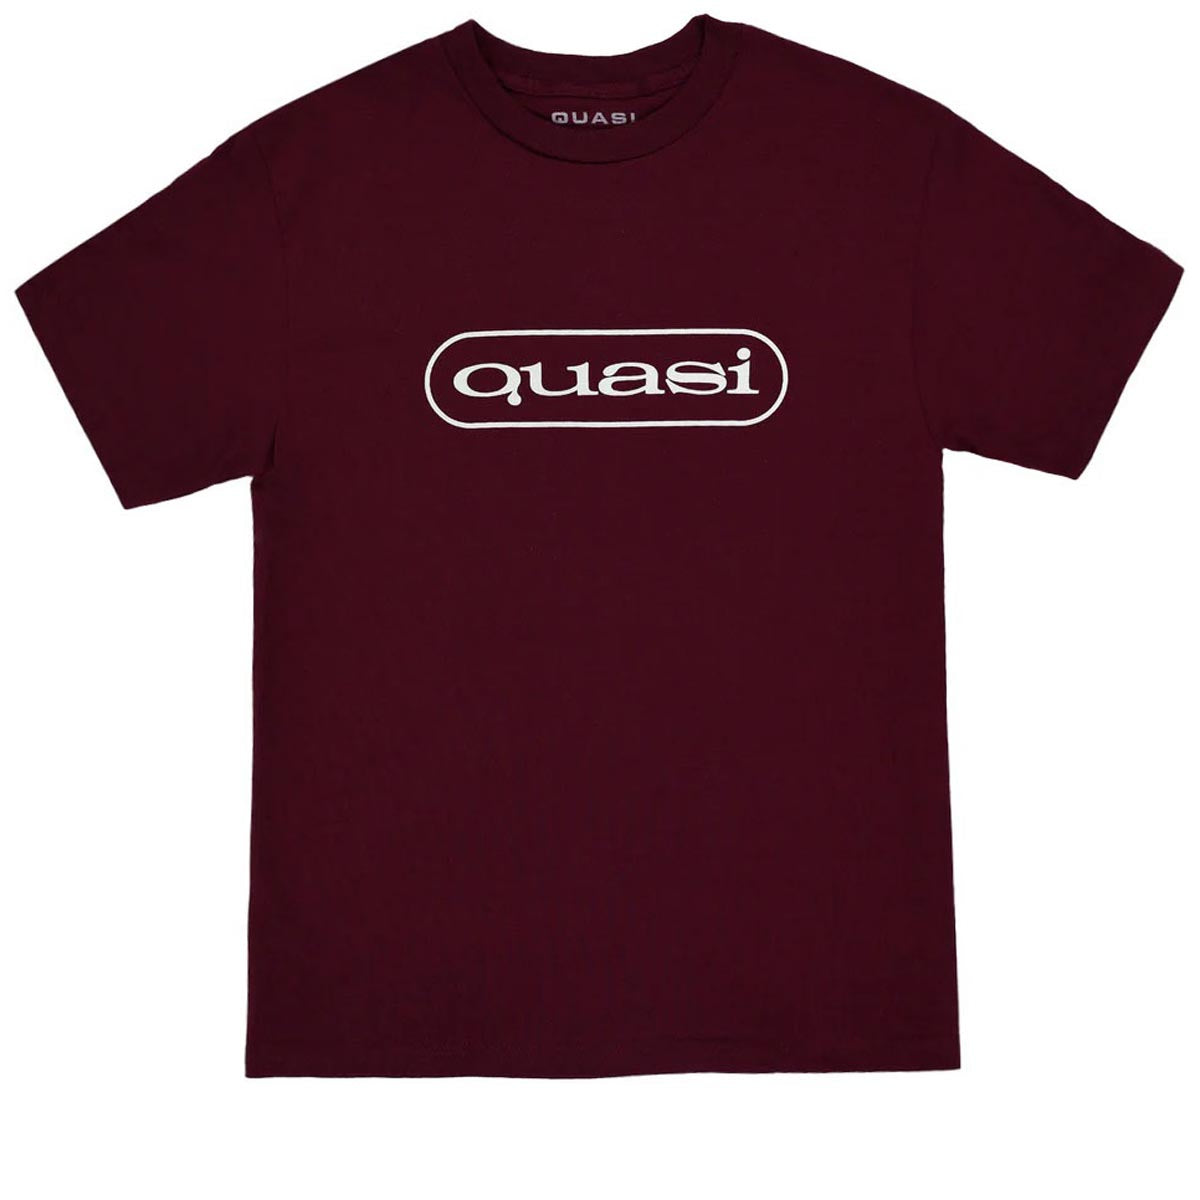 Quasi Boomerang T-Shirt - Burgundy image 1